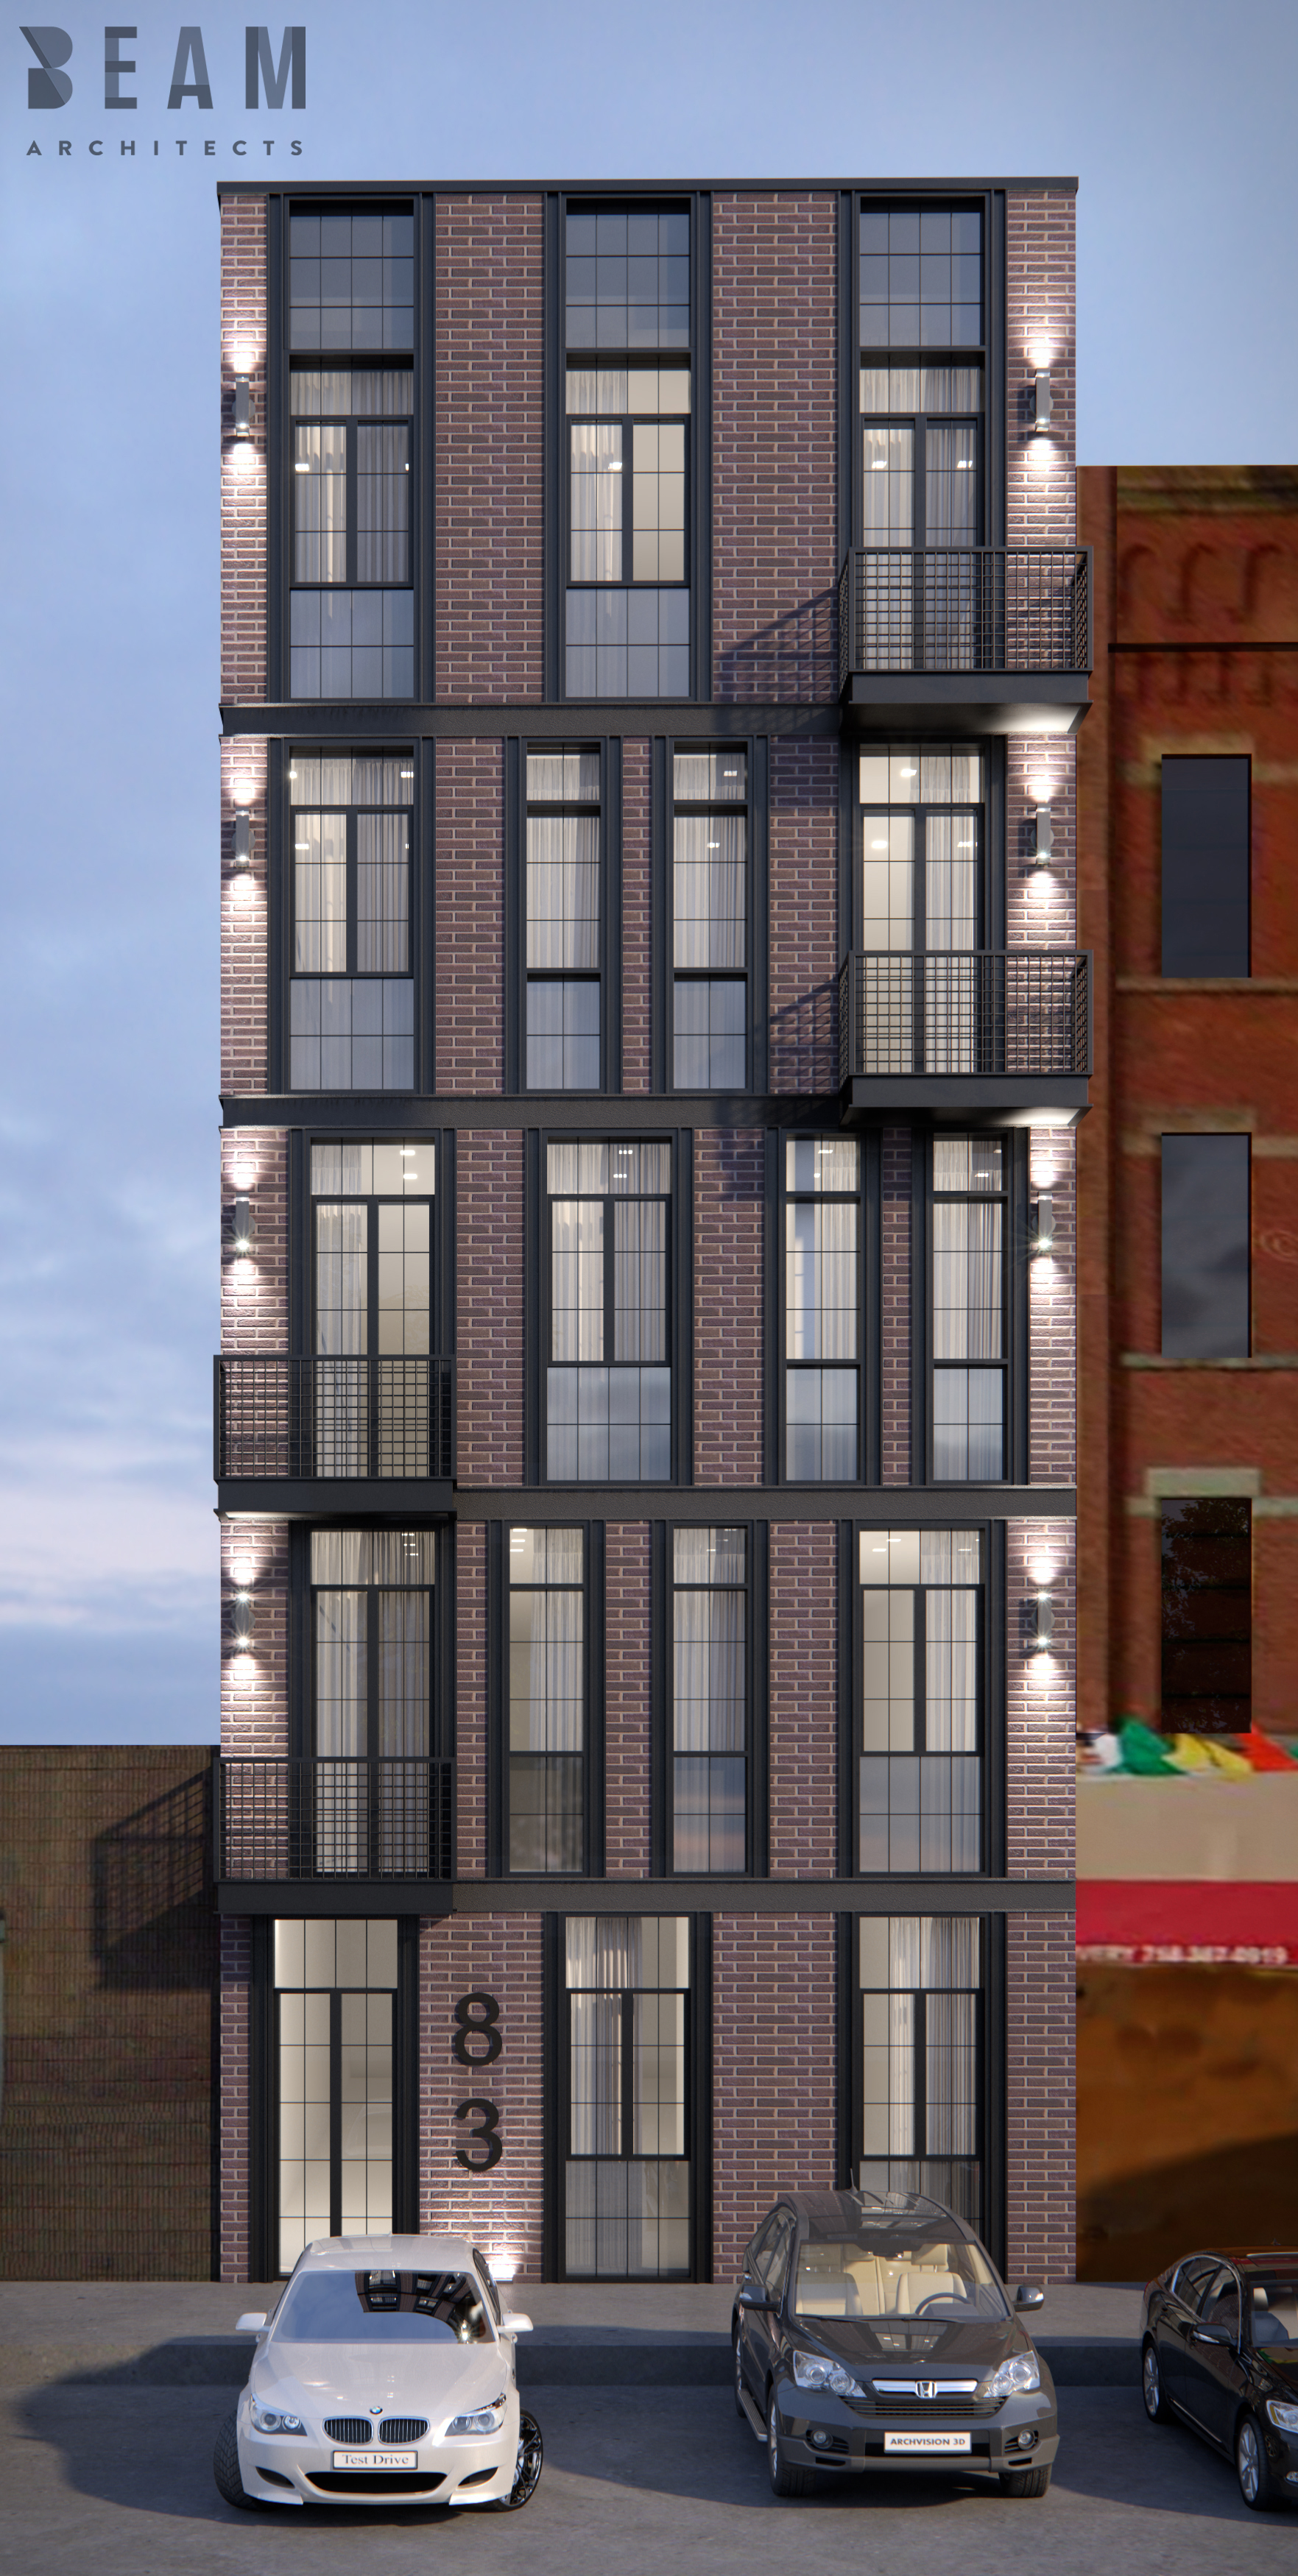 83 Humboldt Street, rendering via J Goldman Design